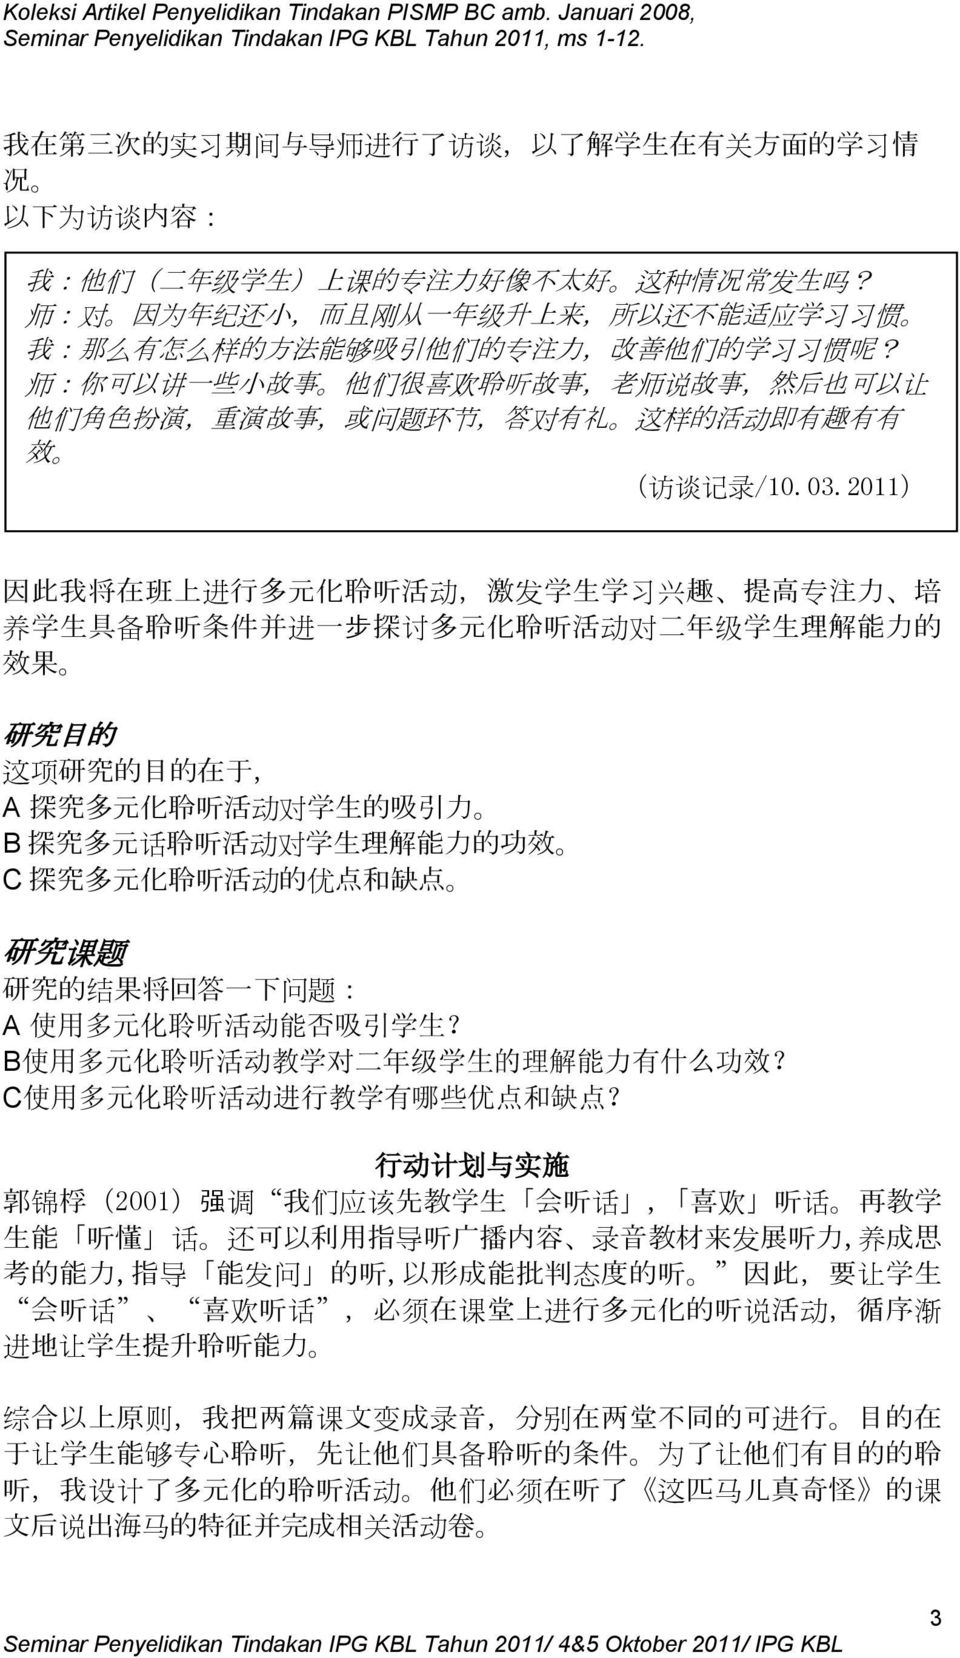 Jawatankuasa Penerbitan Koleksi Artikel Penyelidikan Tindakan Pismp Amb Januari 08 Bahasa Cina Pendidikan Rendah Seminar Penyelidikan Tindakan Ip Pdf Free Download